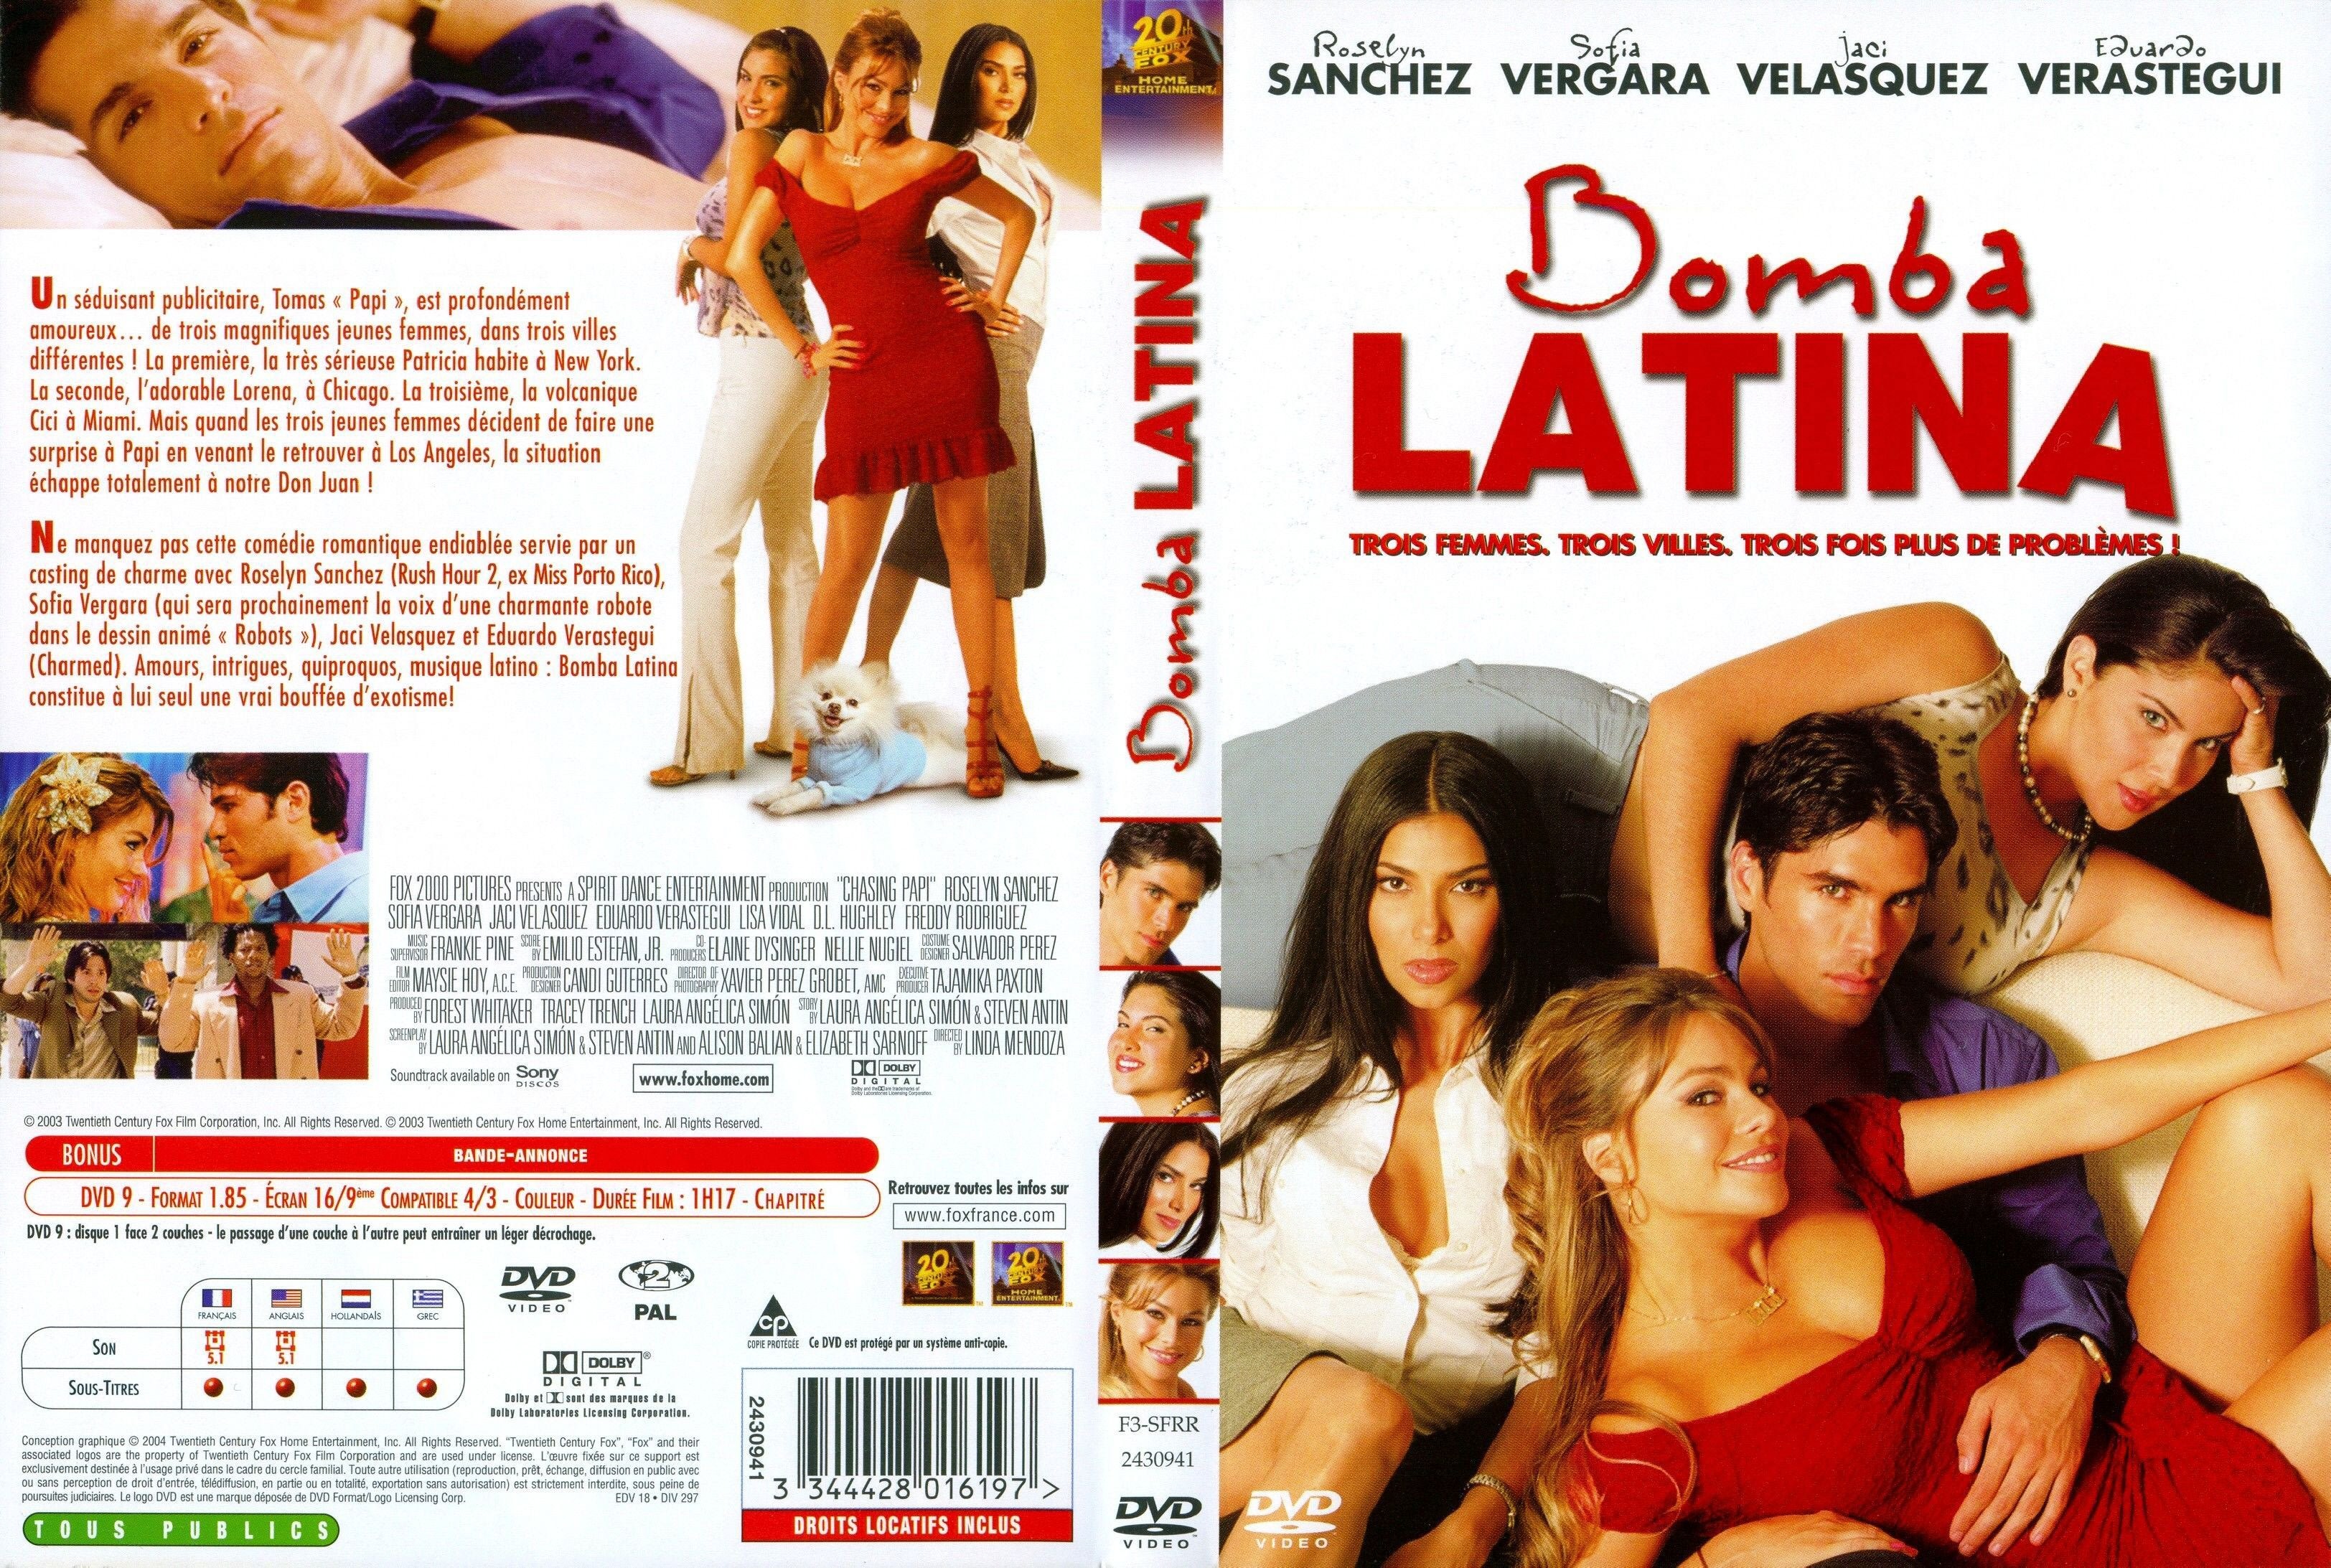 Jaquette DVD Bomba Latina